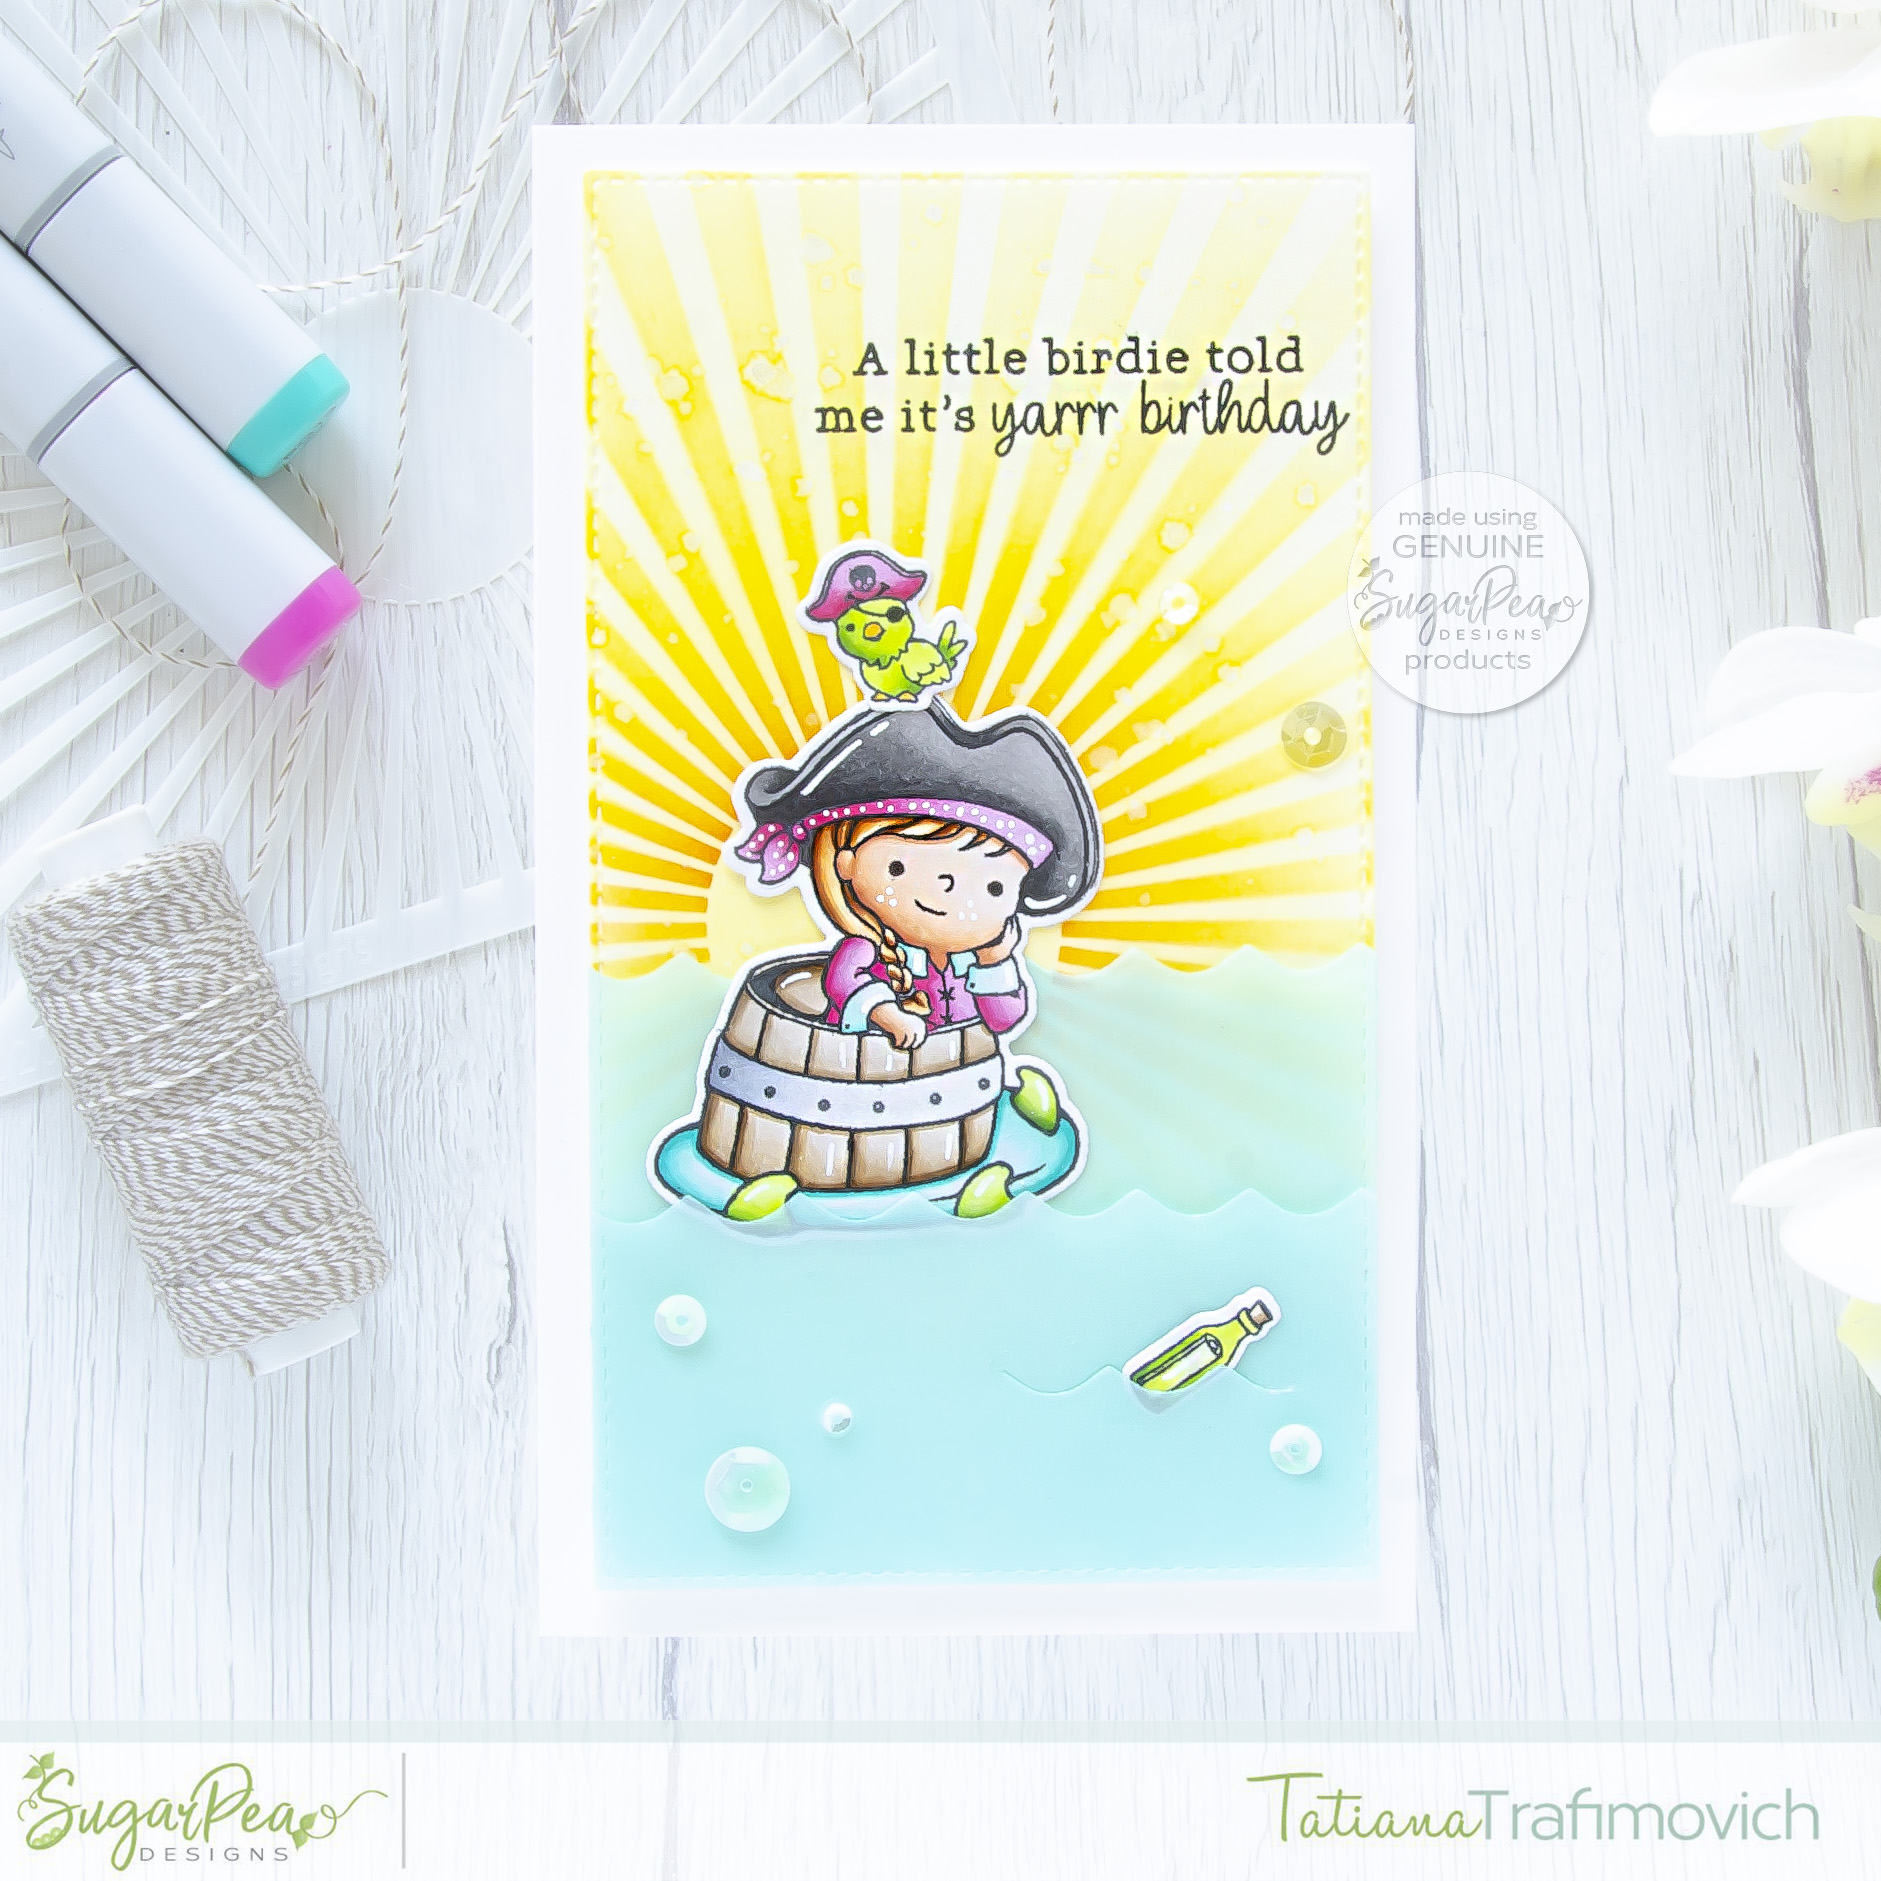 It's Yarrr Birthday #handmade card by Tatiana Trafimovich #tatianacraftandart - Captain of My Heart stamp set by SugarPea Designs #sugarpeadesigns